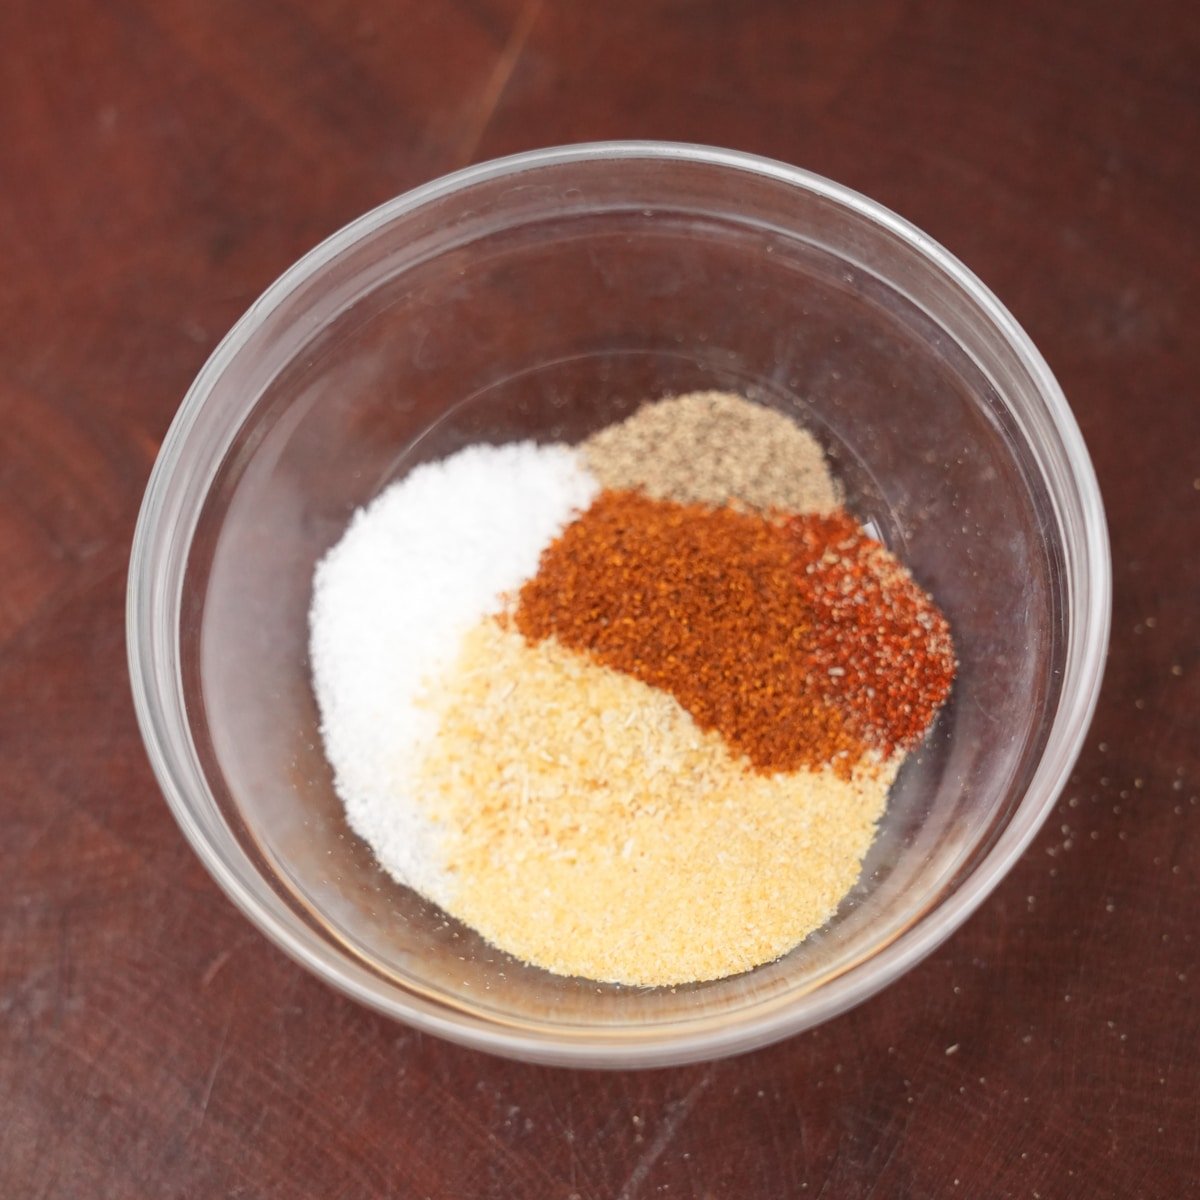 A seasoning mix of salt, pepper, garlic powder, onion powder, paprika, and cayenne pepper in a small glass bowl.